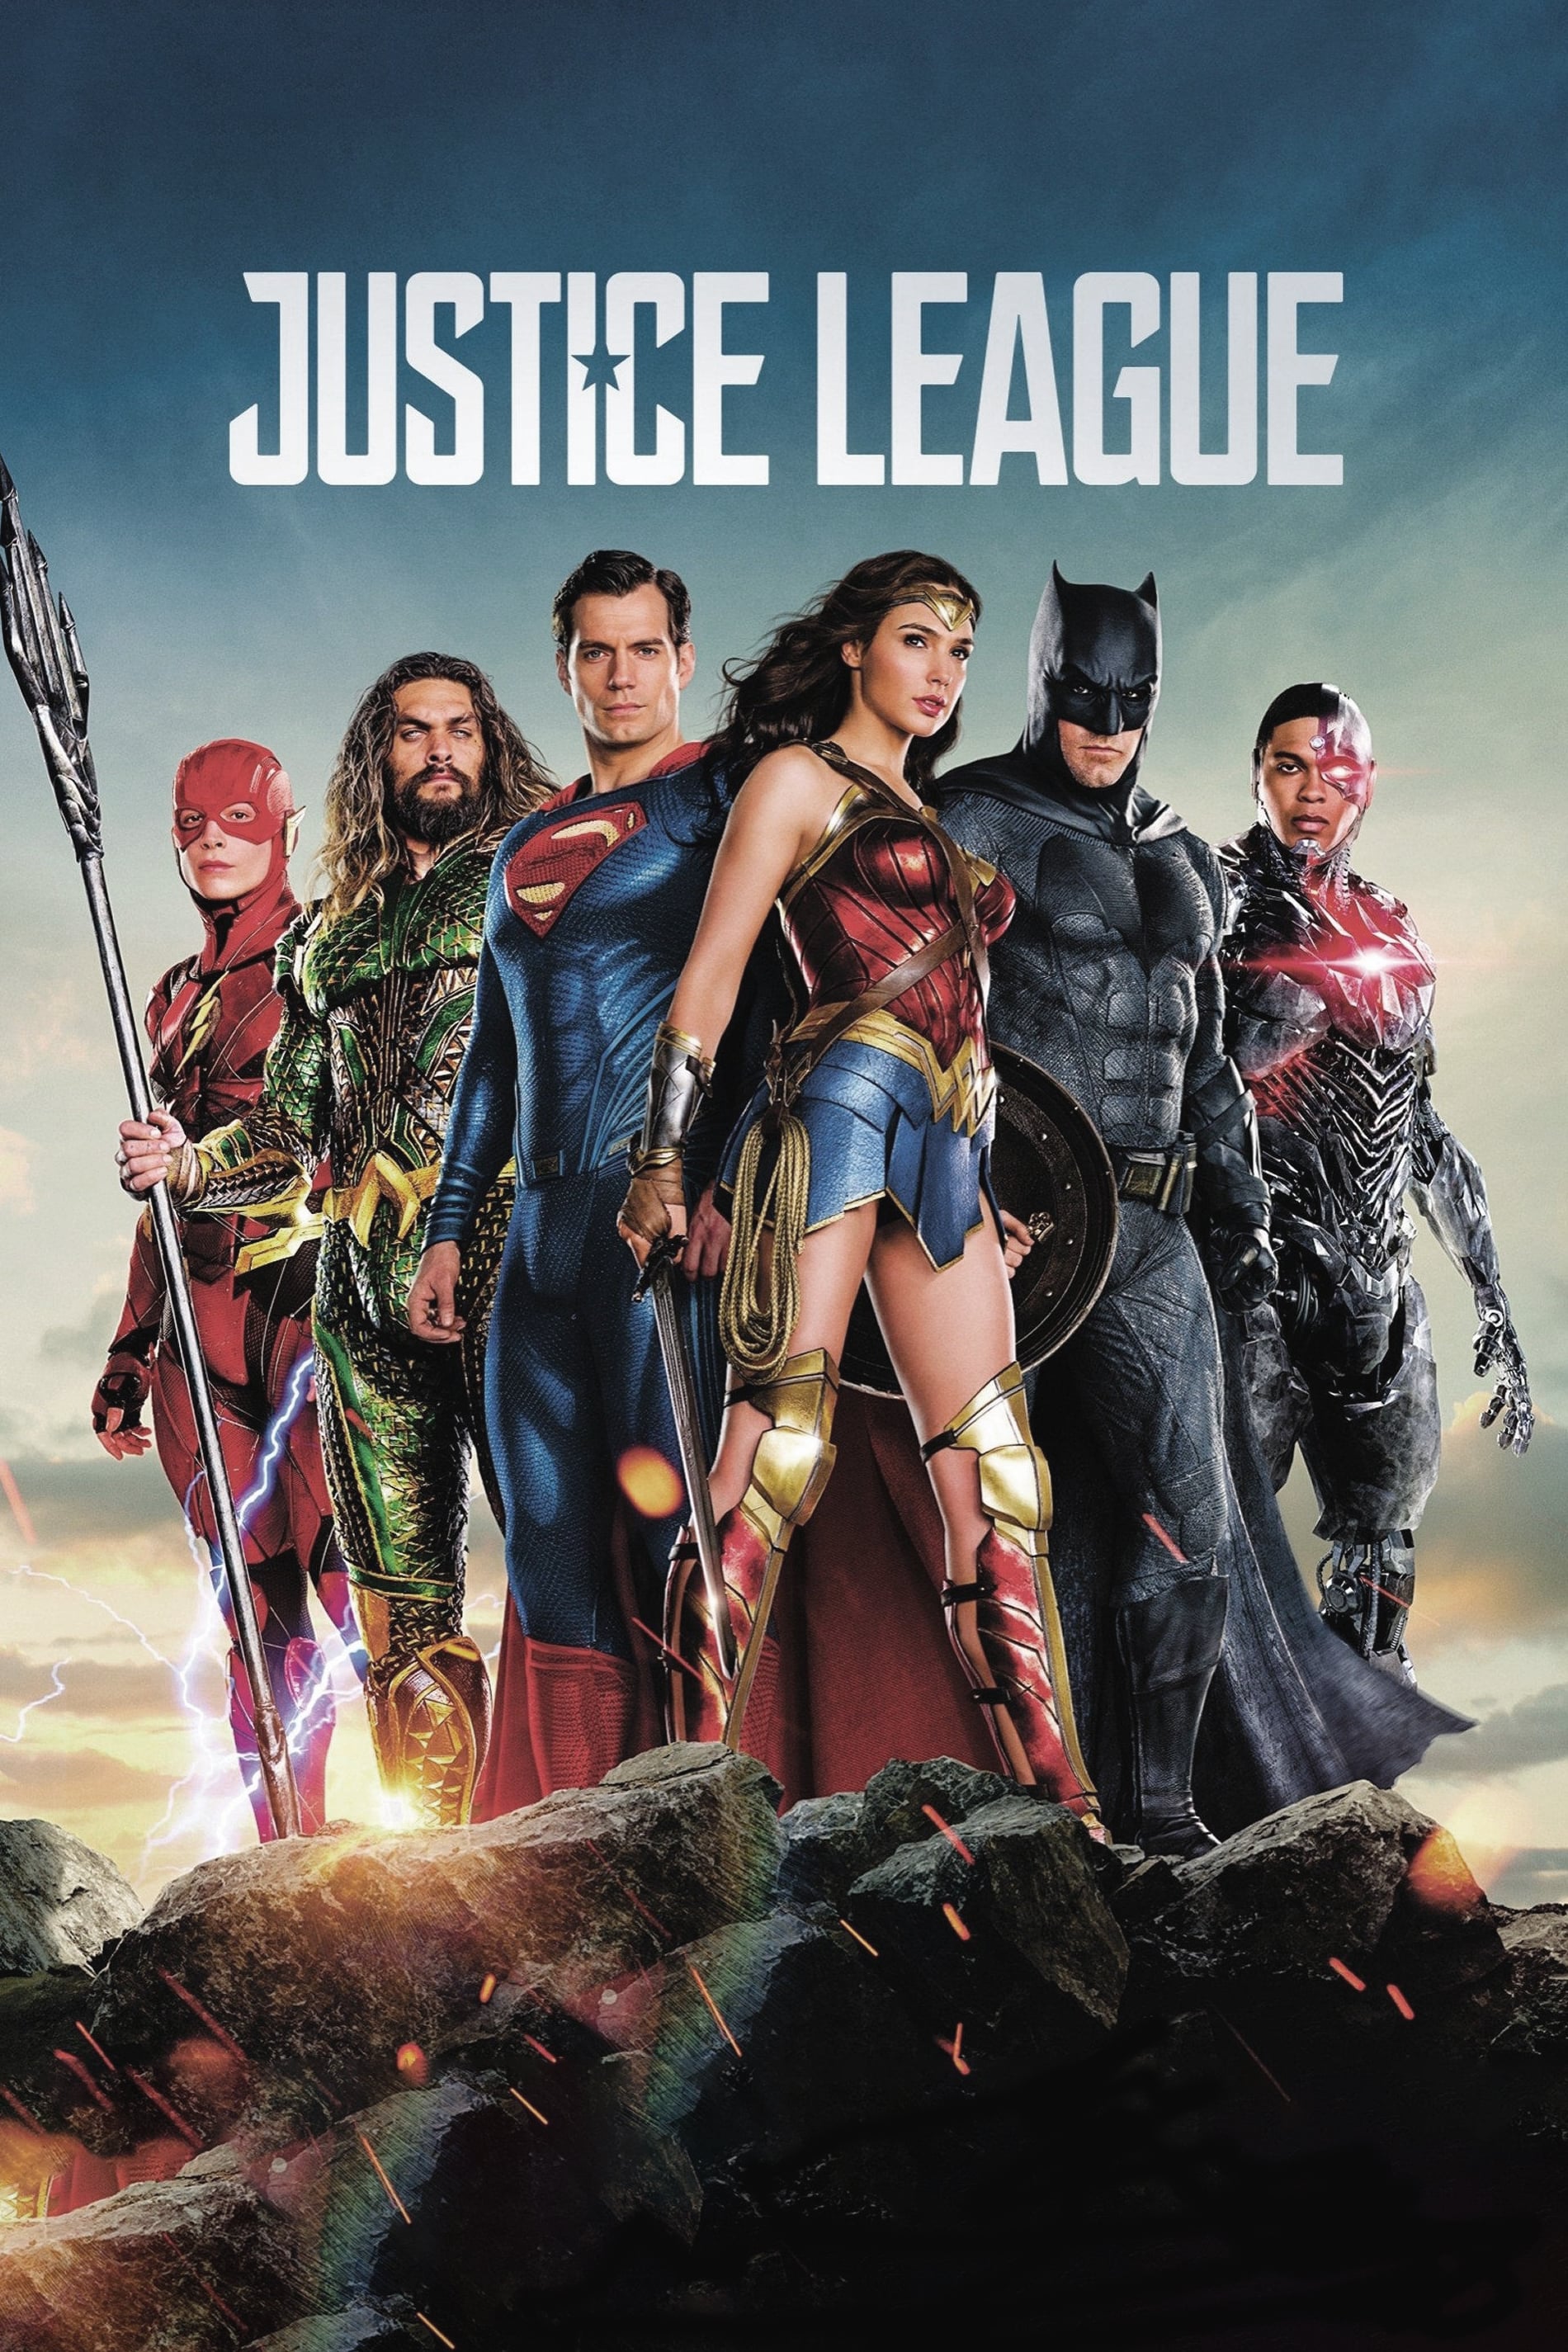 Justice League (2017) Poster Justice League (DCEU) Photo (43105388